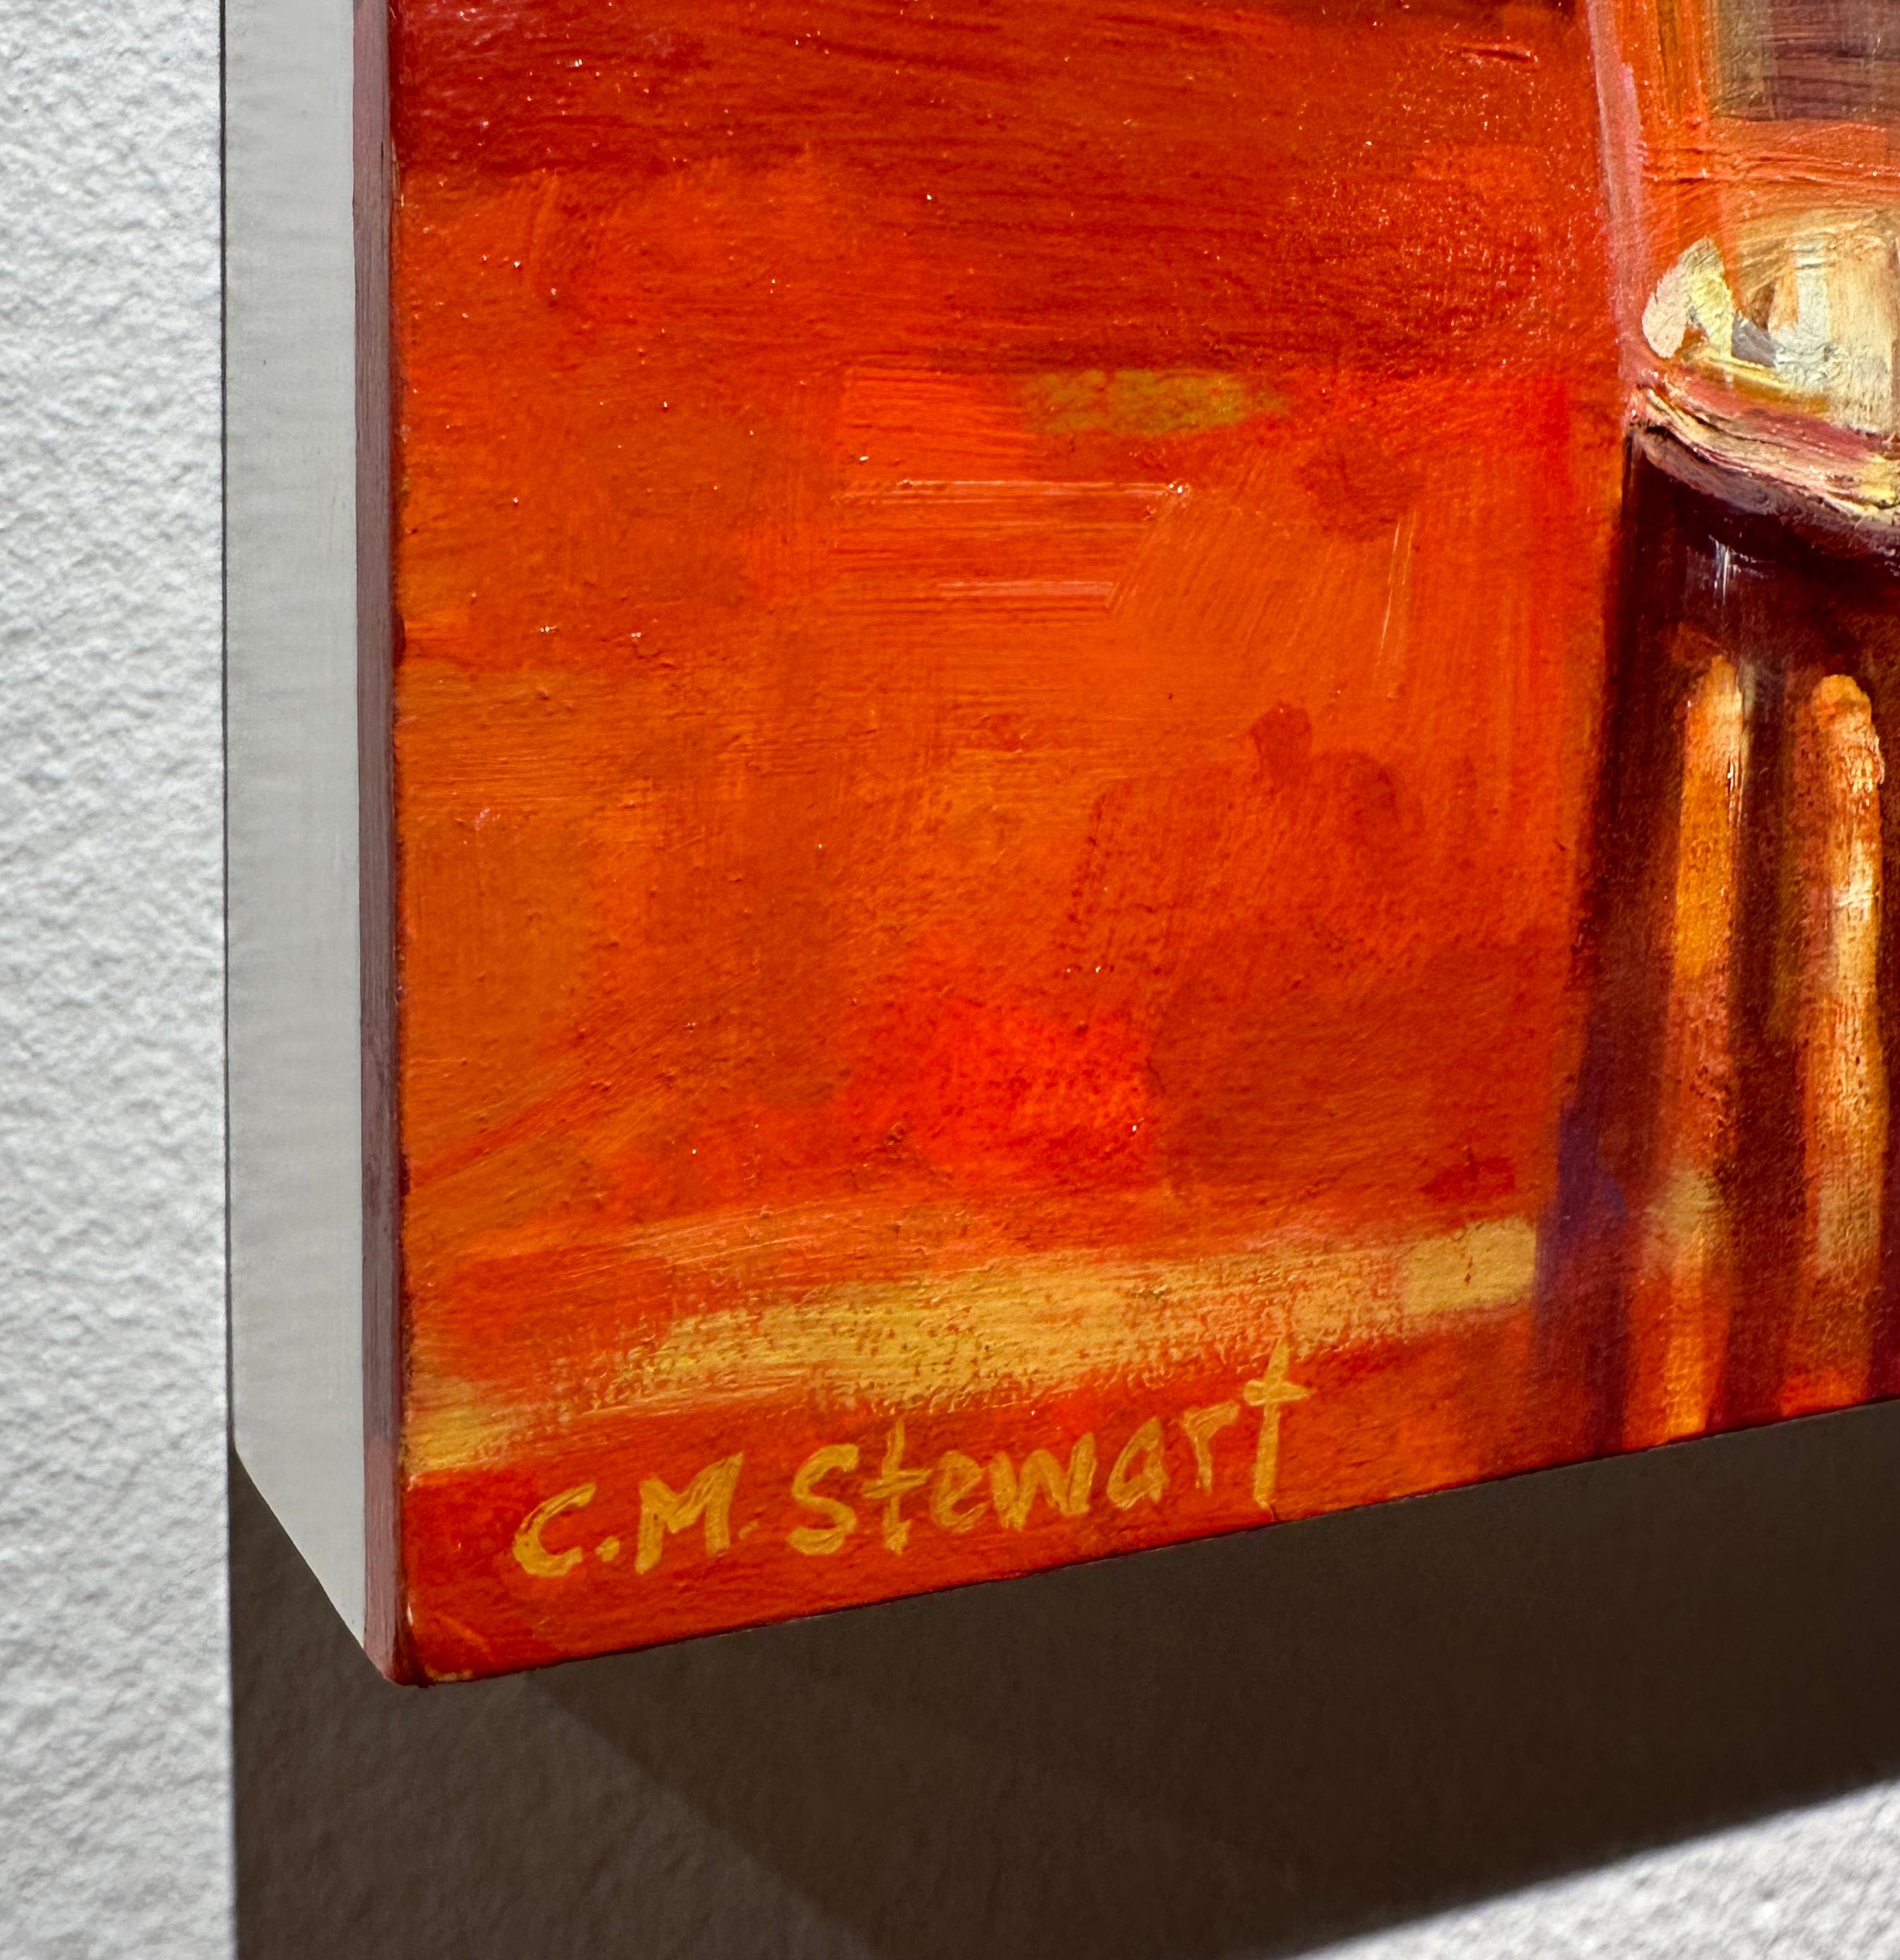 Stacked Fabric, Mandarin - Vibrant Patterns, Reflective Glass & an Orange - Painting by Carol Stewart